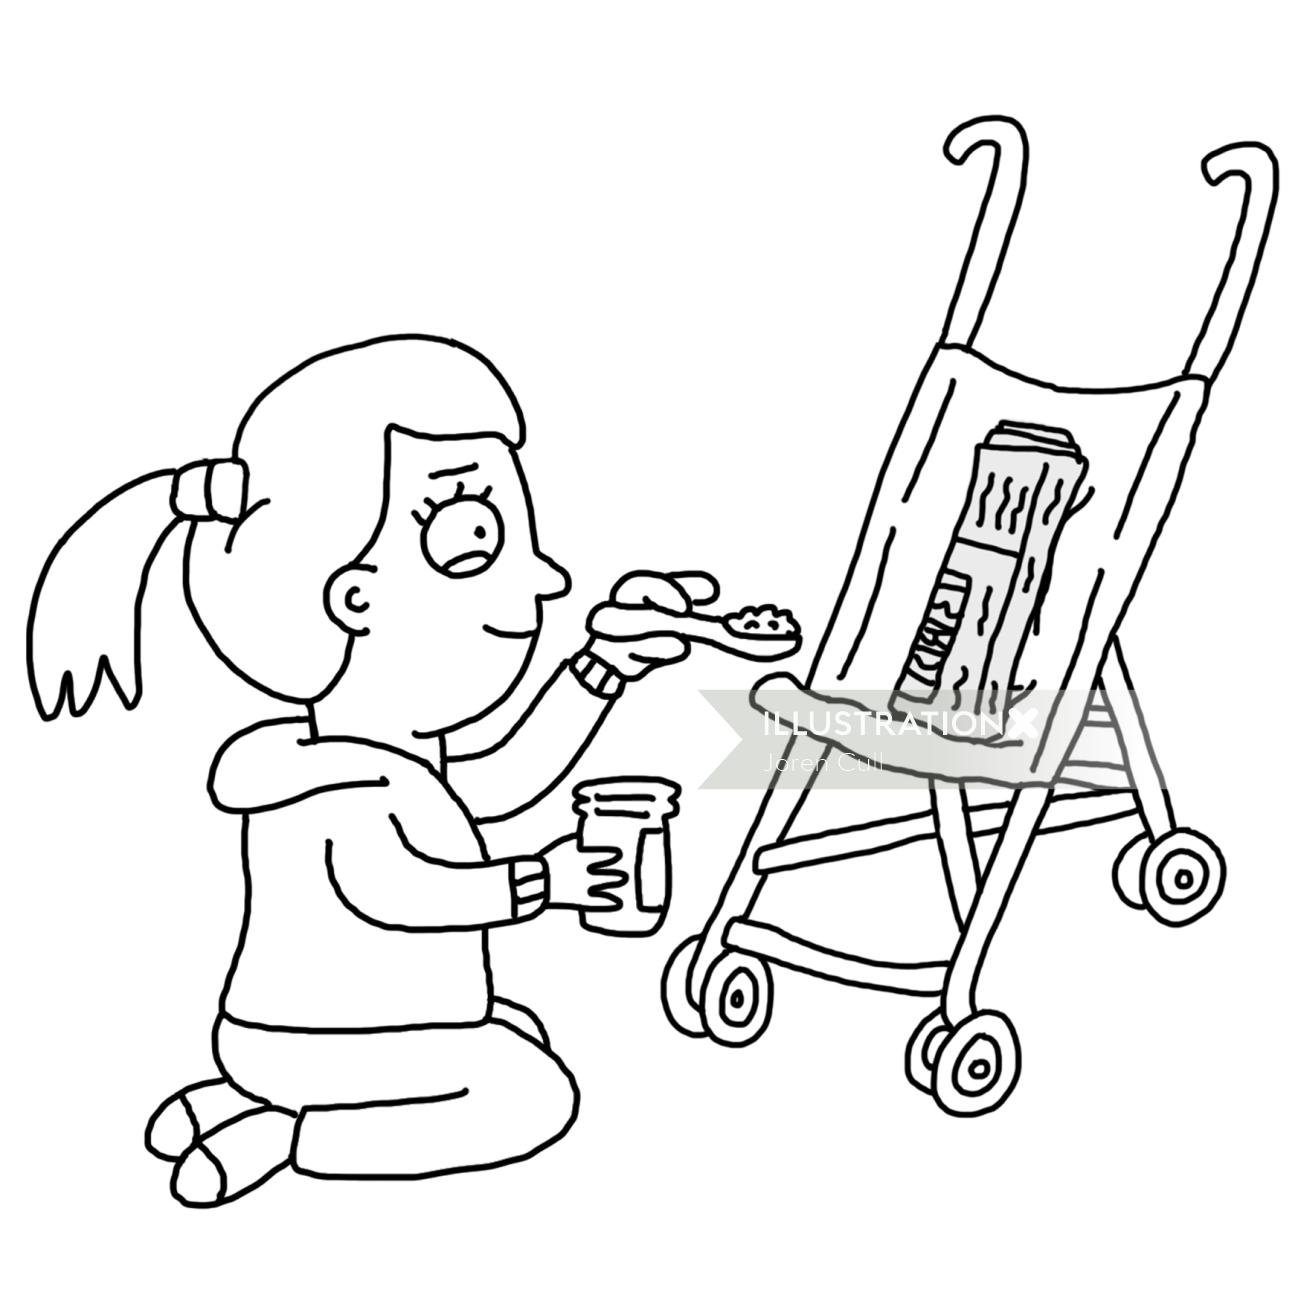 Feeding the baby line illustration 